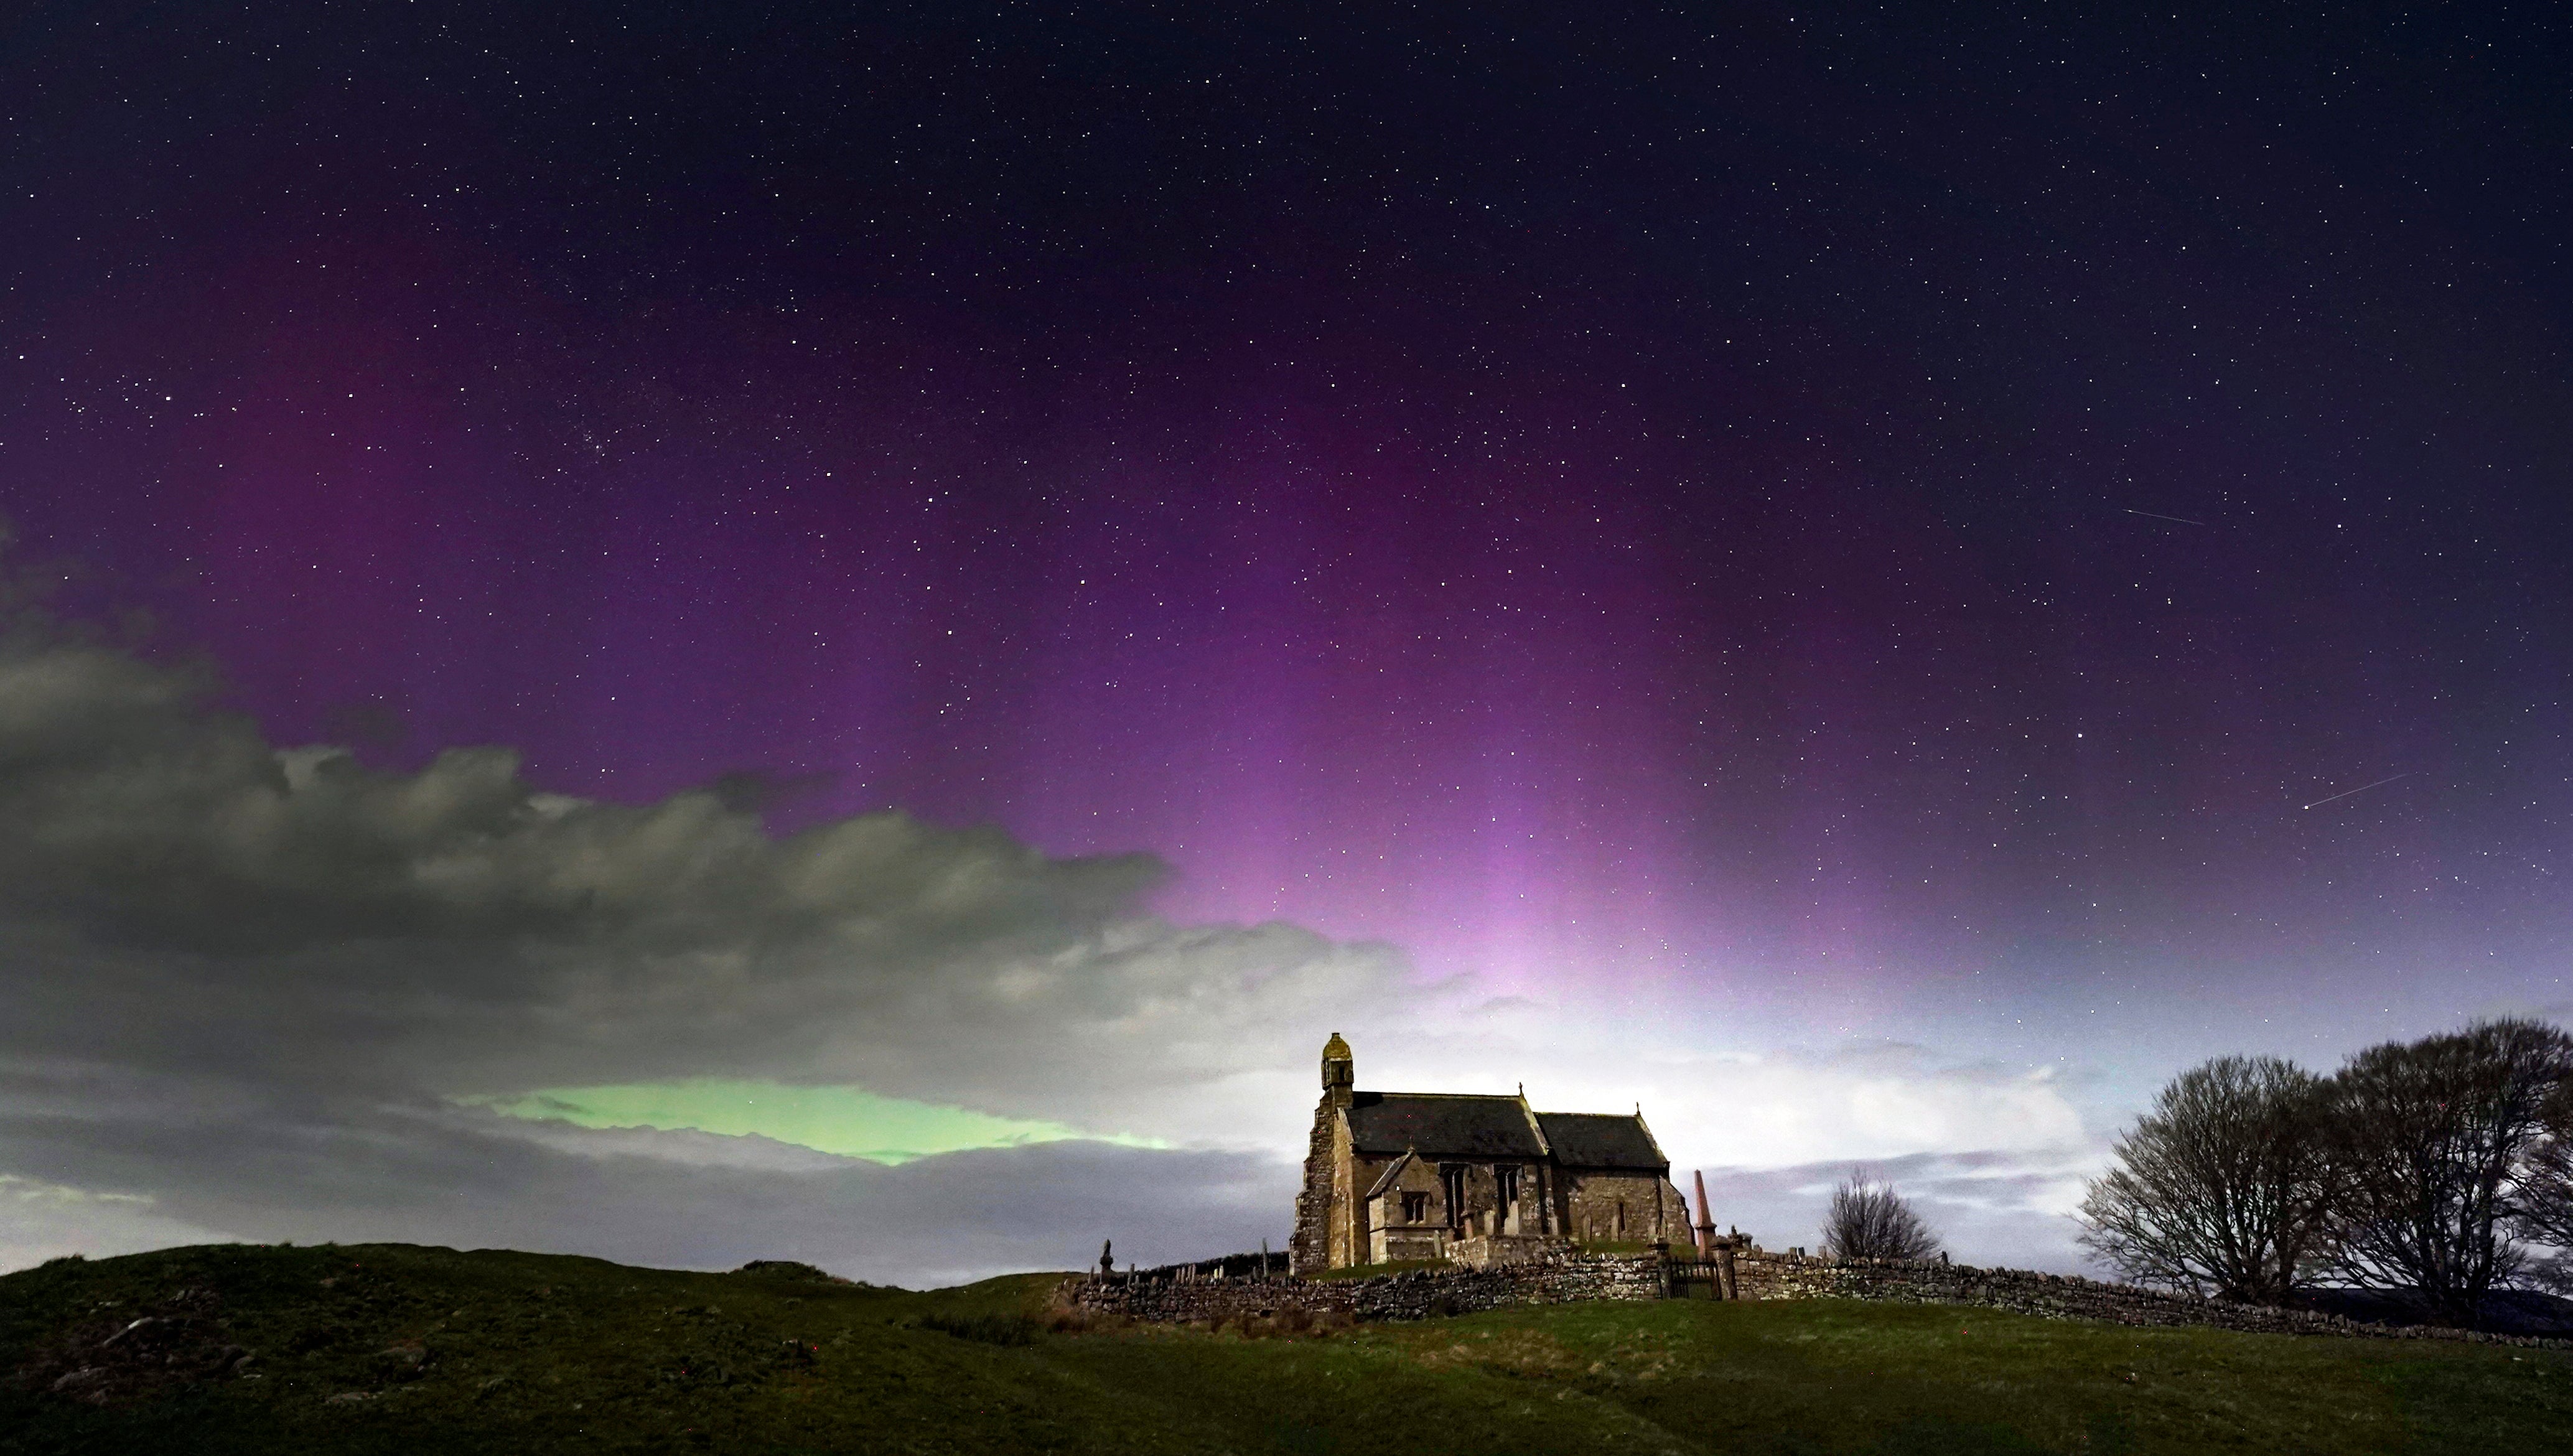 The aurora borealis over St Aidan’s church in Thockrington, Northumberland